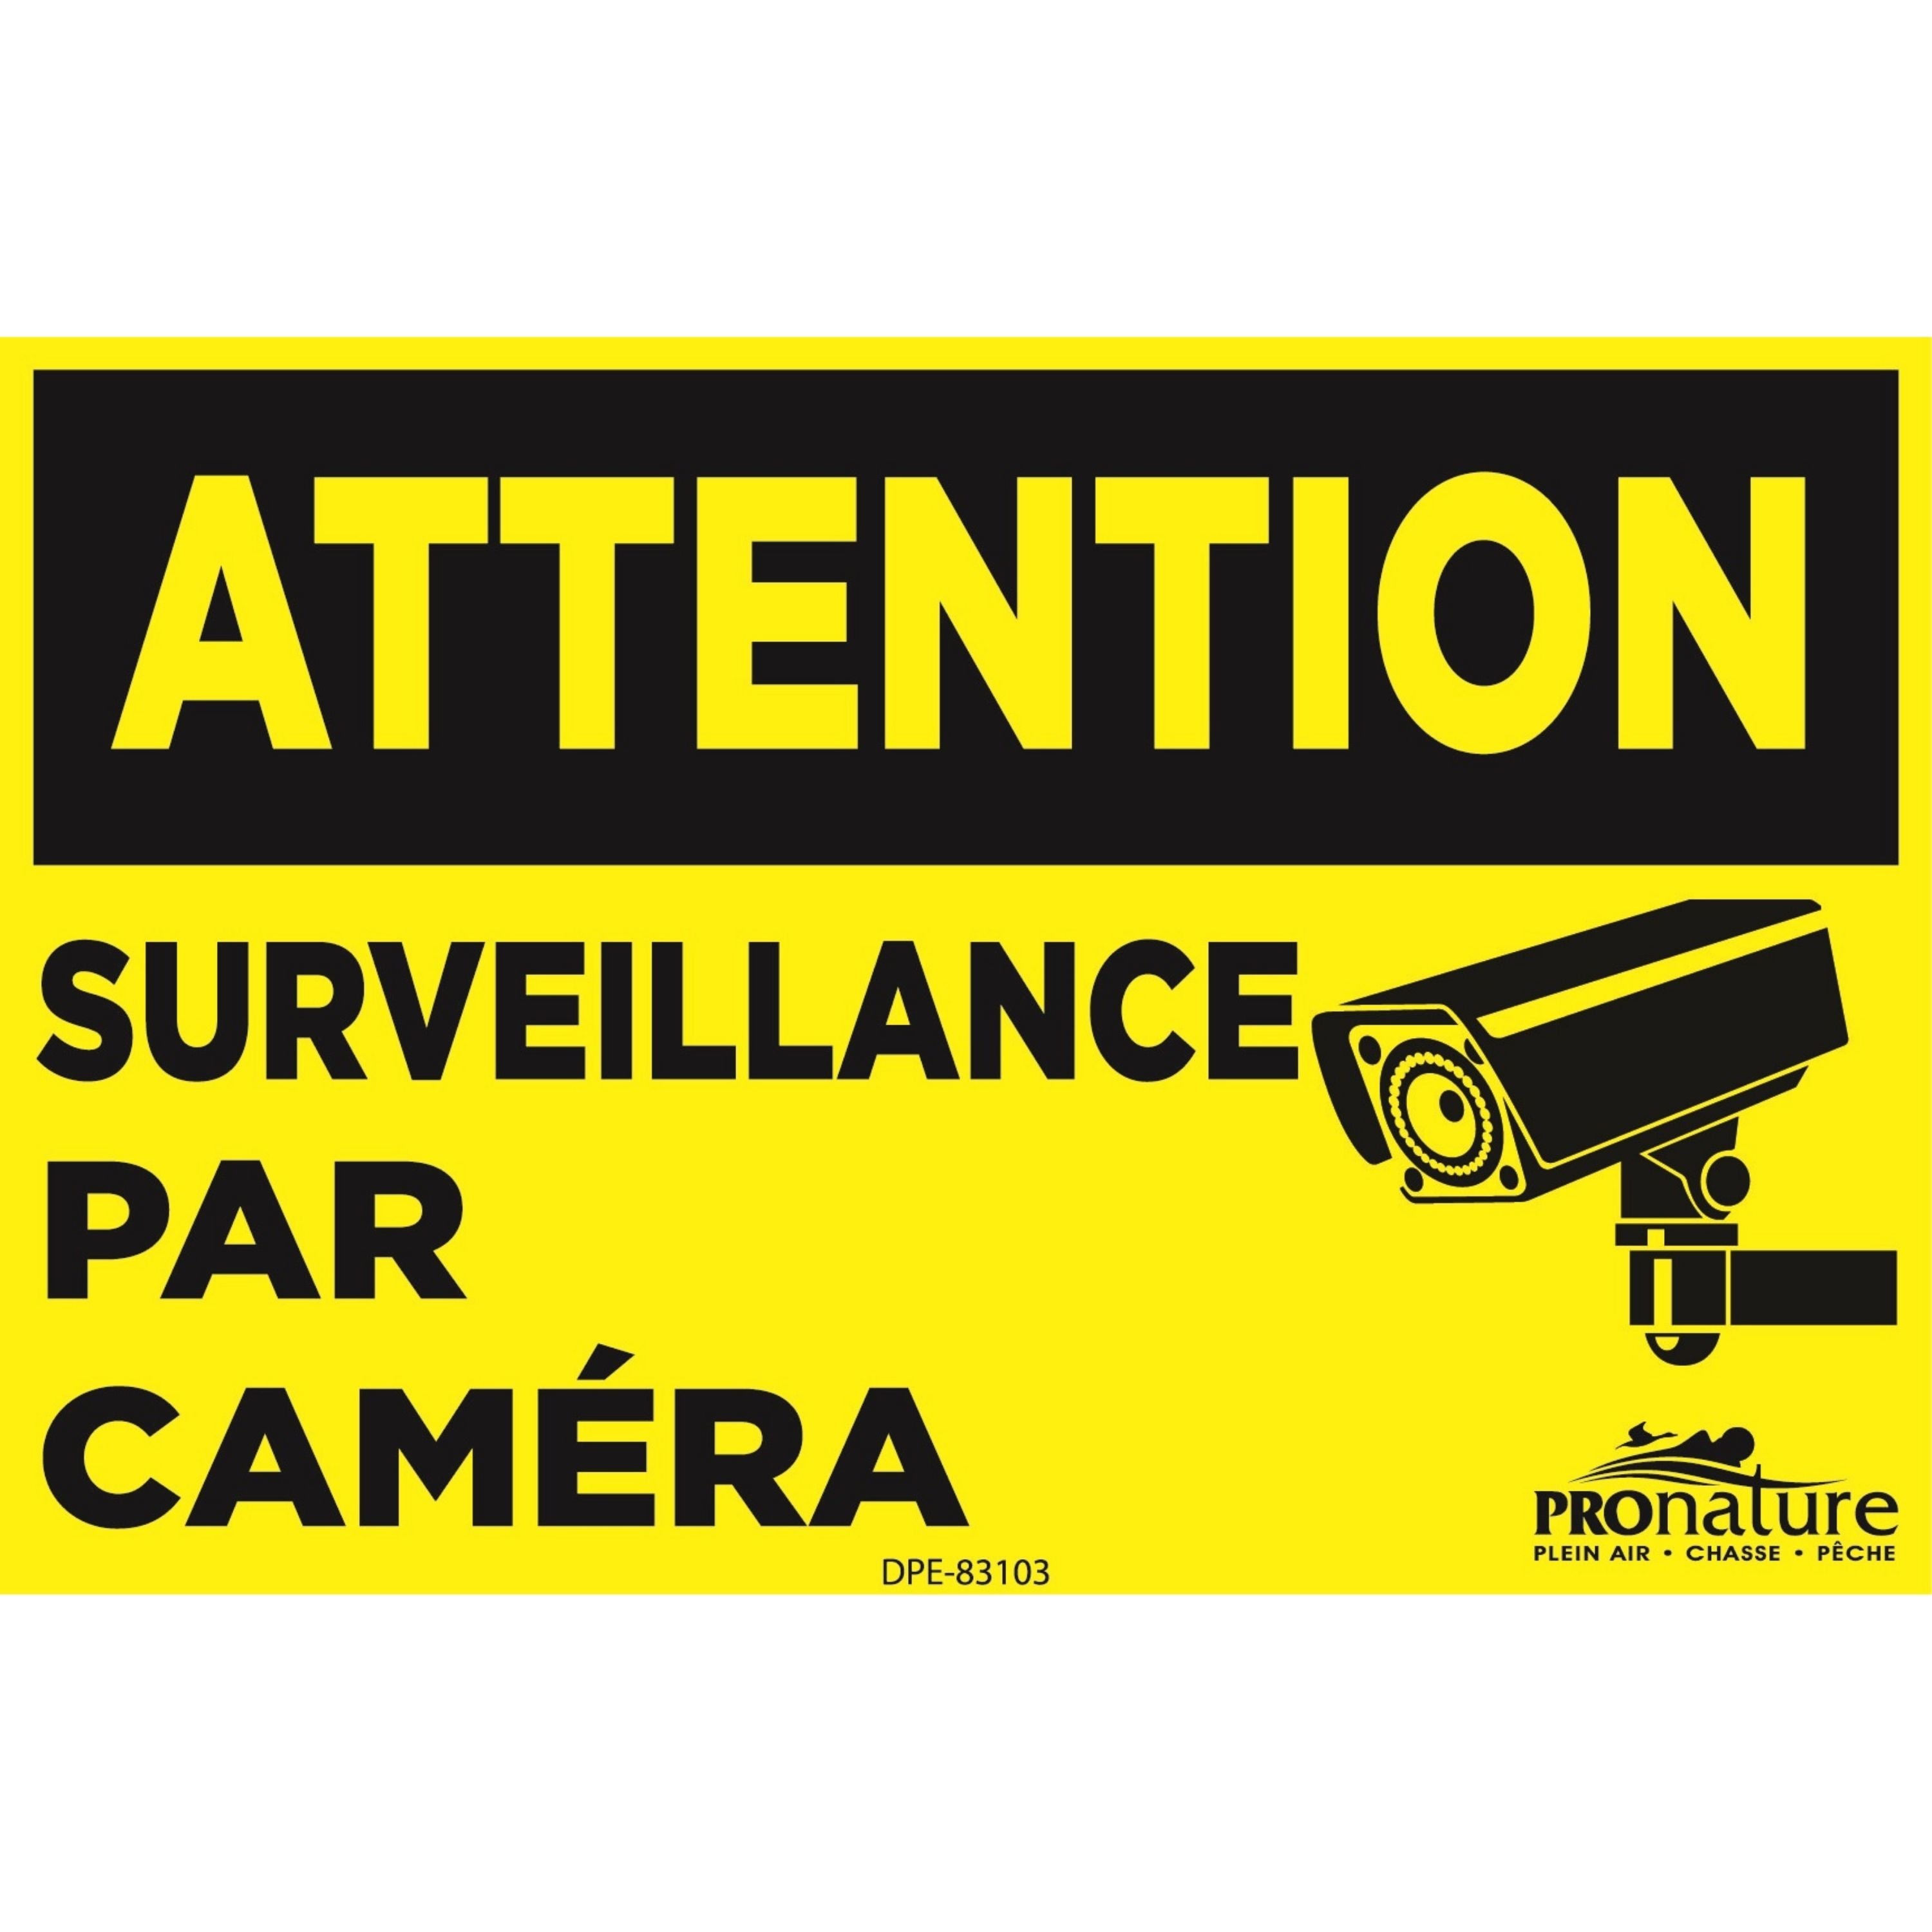 “Attention, surveillance par caméra”, sign